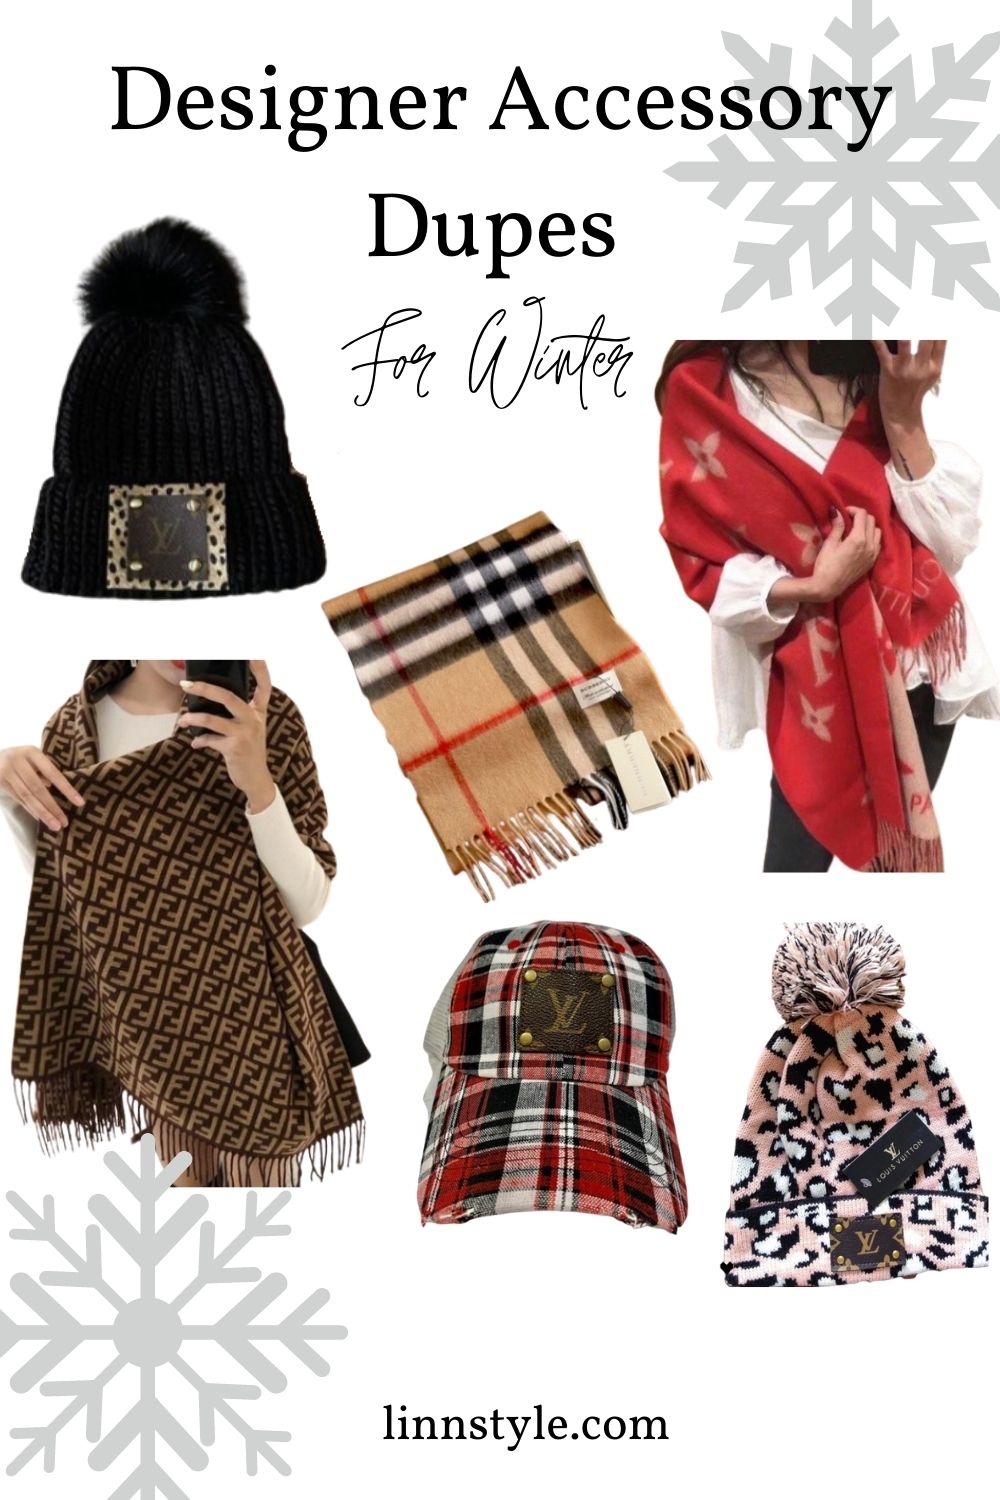 Designer Inspired Accessories For Winter - Linn Style by Jessica Linn